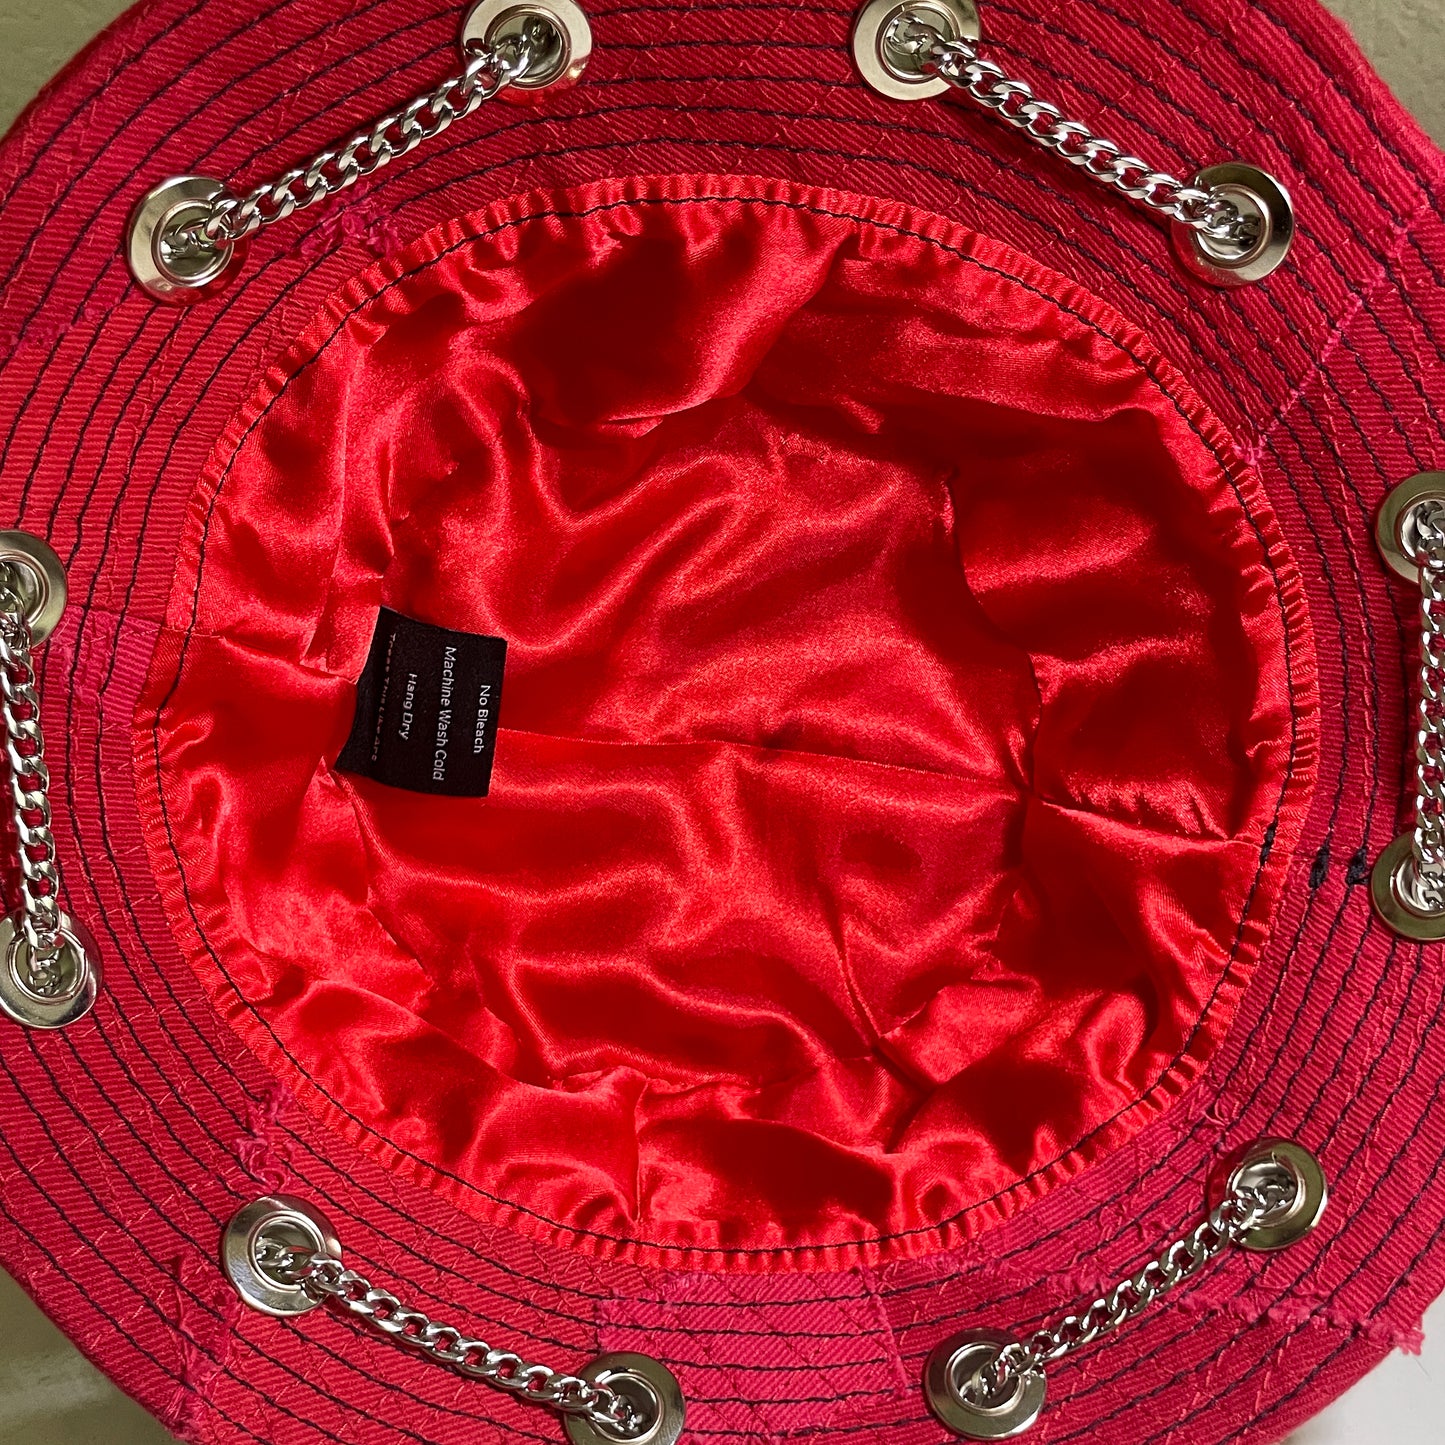 Red and Black Sashiko Bunny Hat 1of1